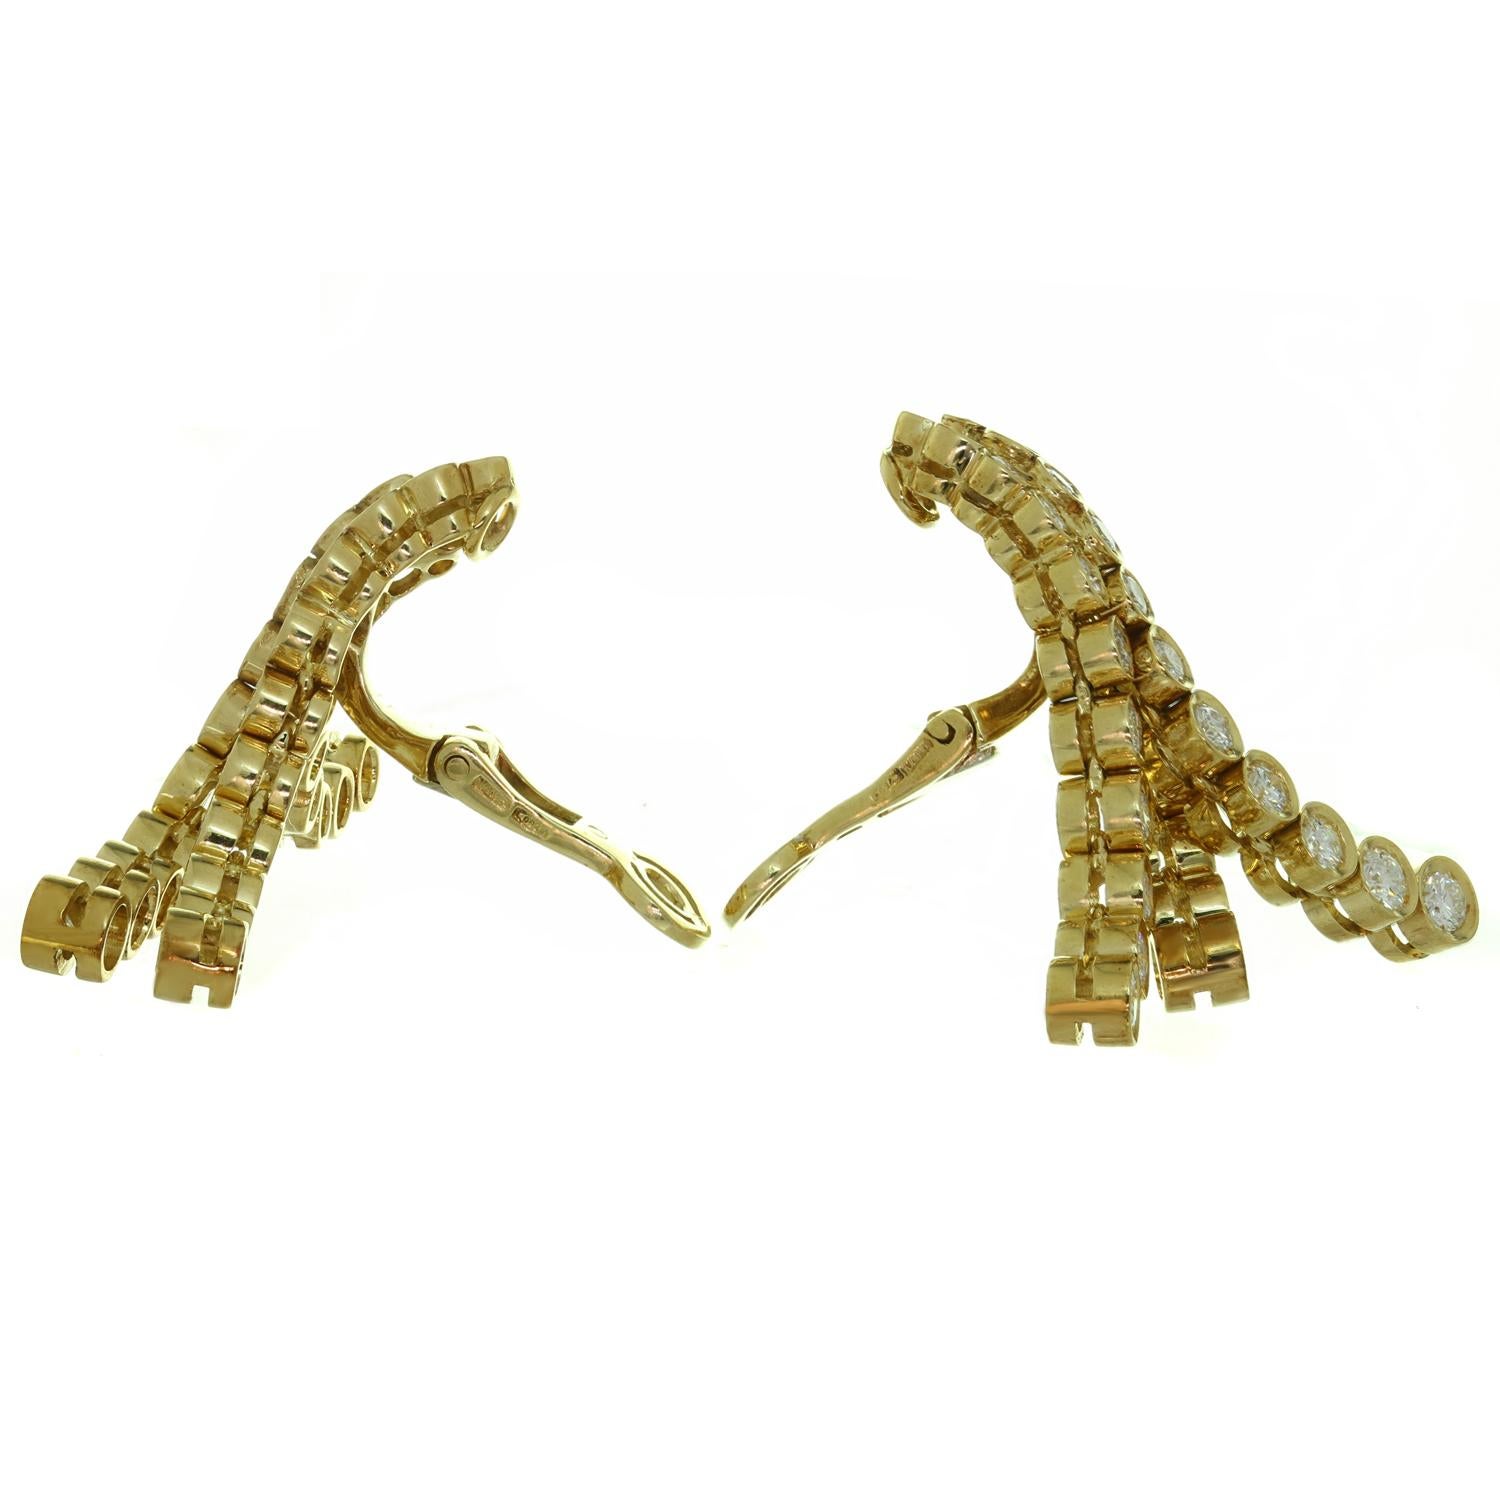 Brilliant Cut FRED PARIS Diamond Yellow Gold Cascade Chandelier Earrings